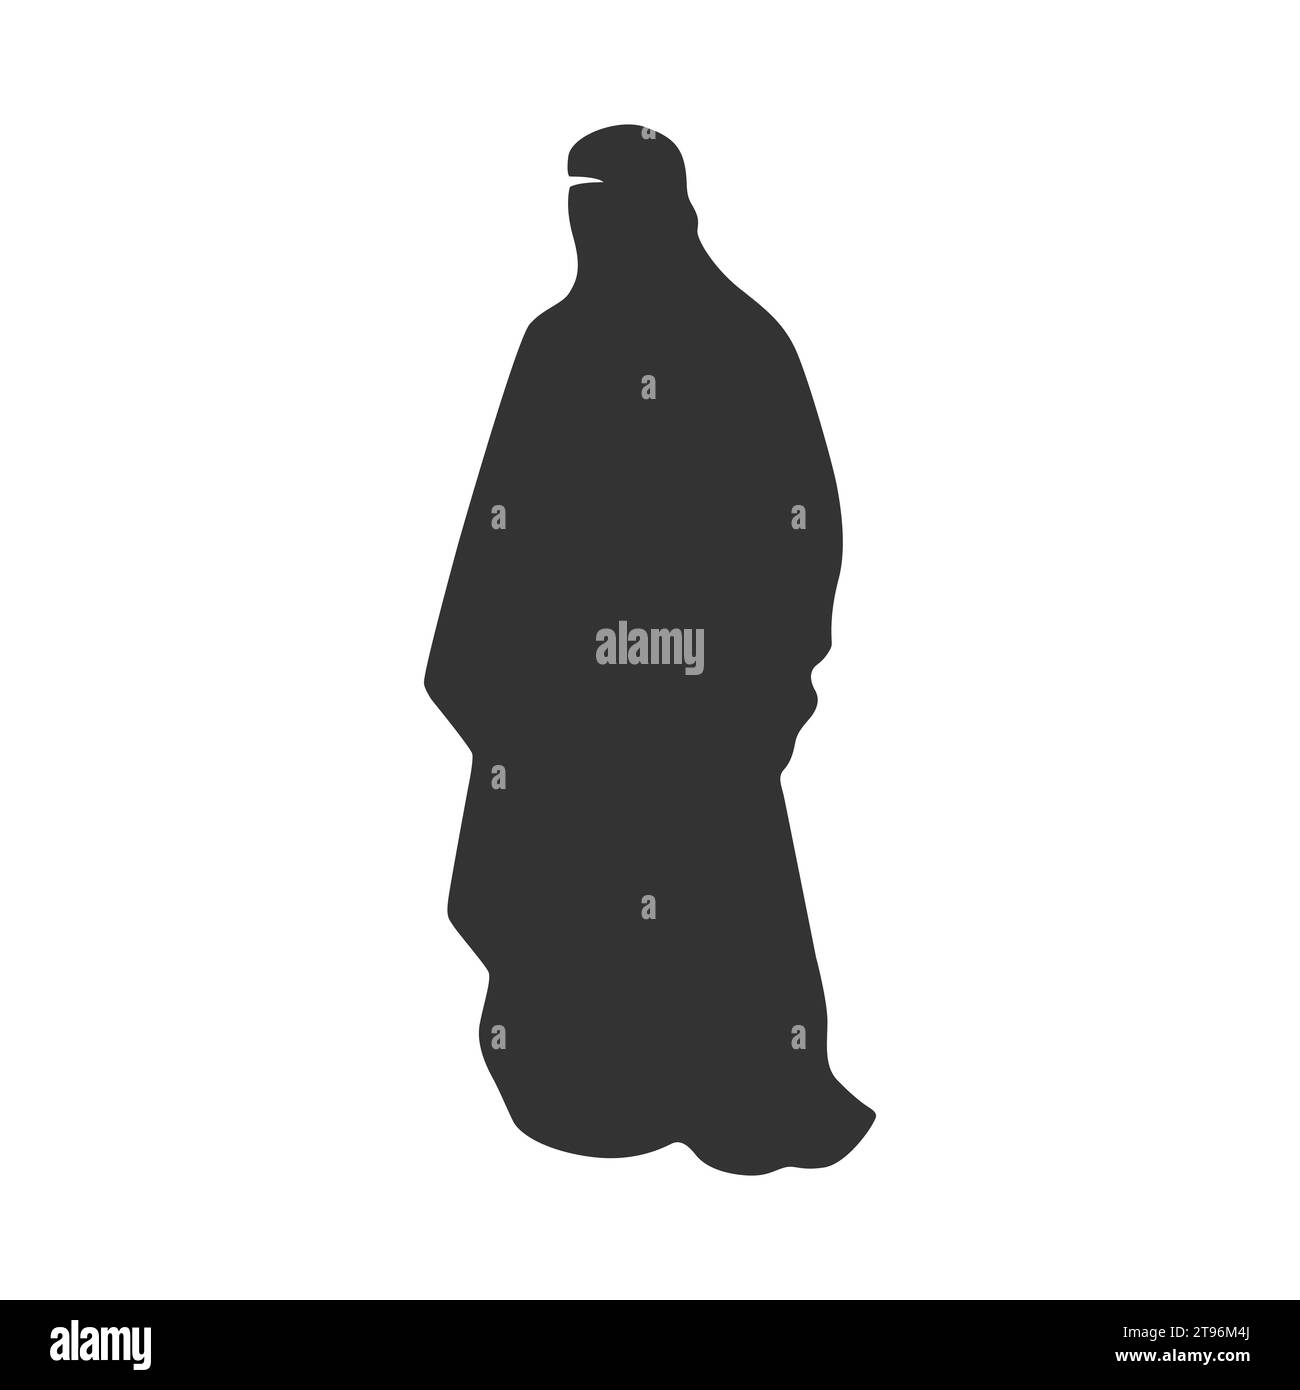 Muslim niqab woman silhouette. Vector illustration Stock Vector Image ...